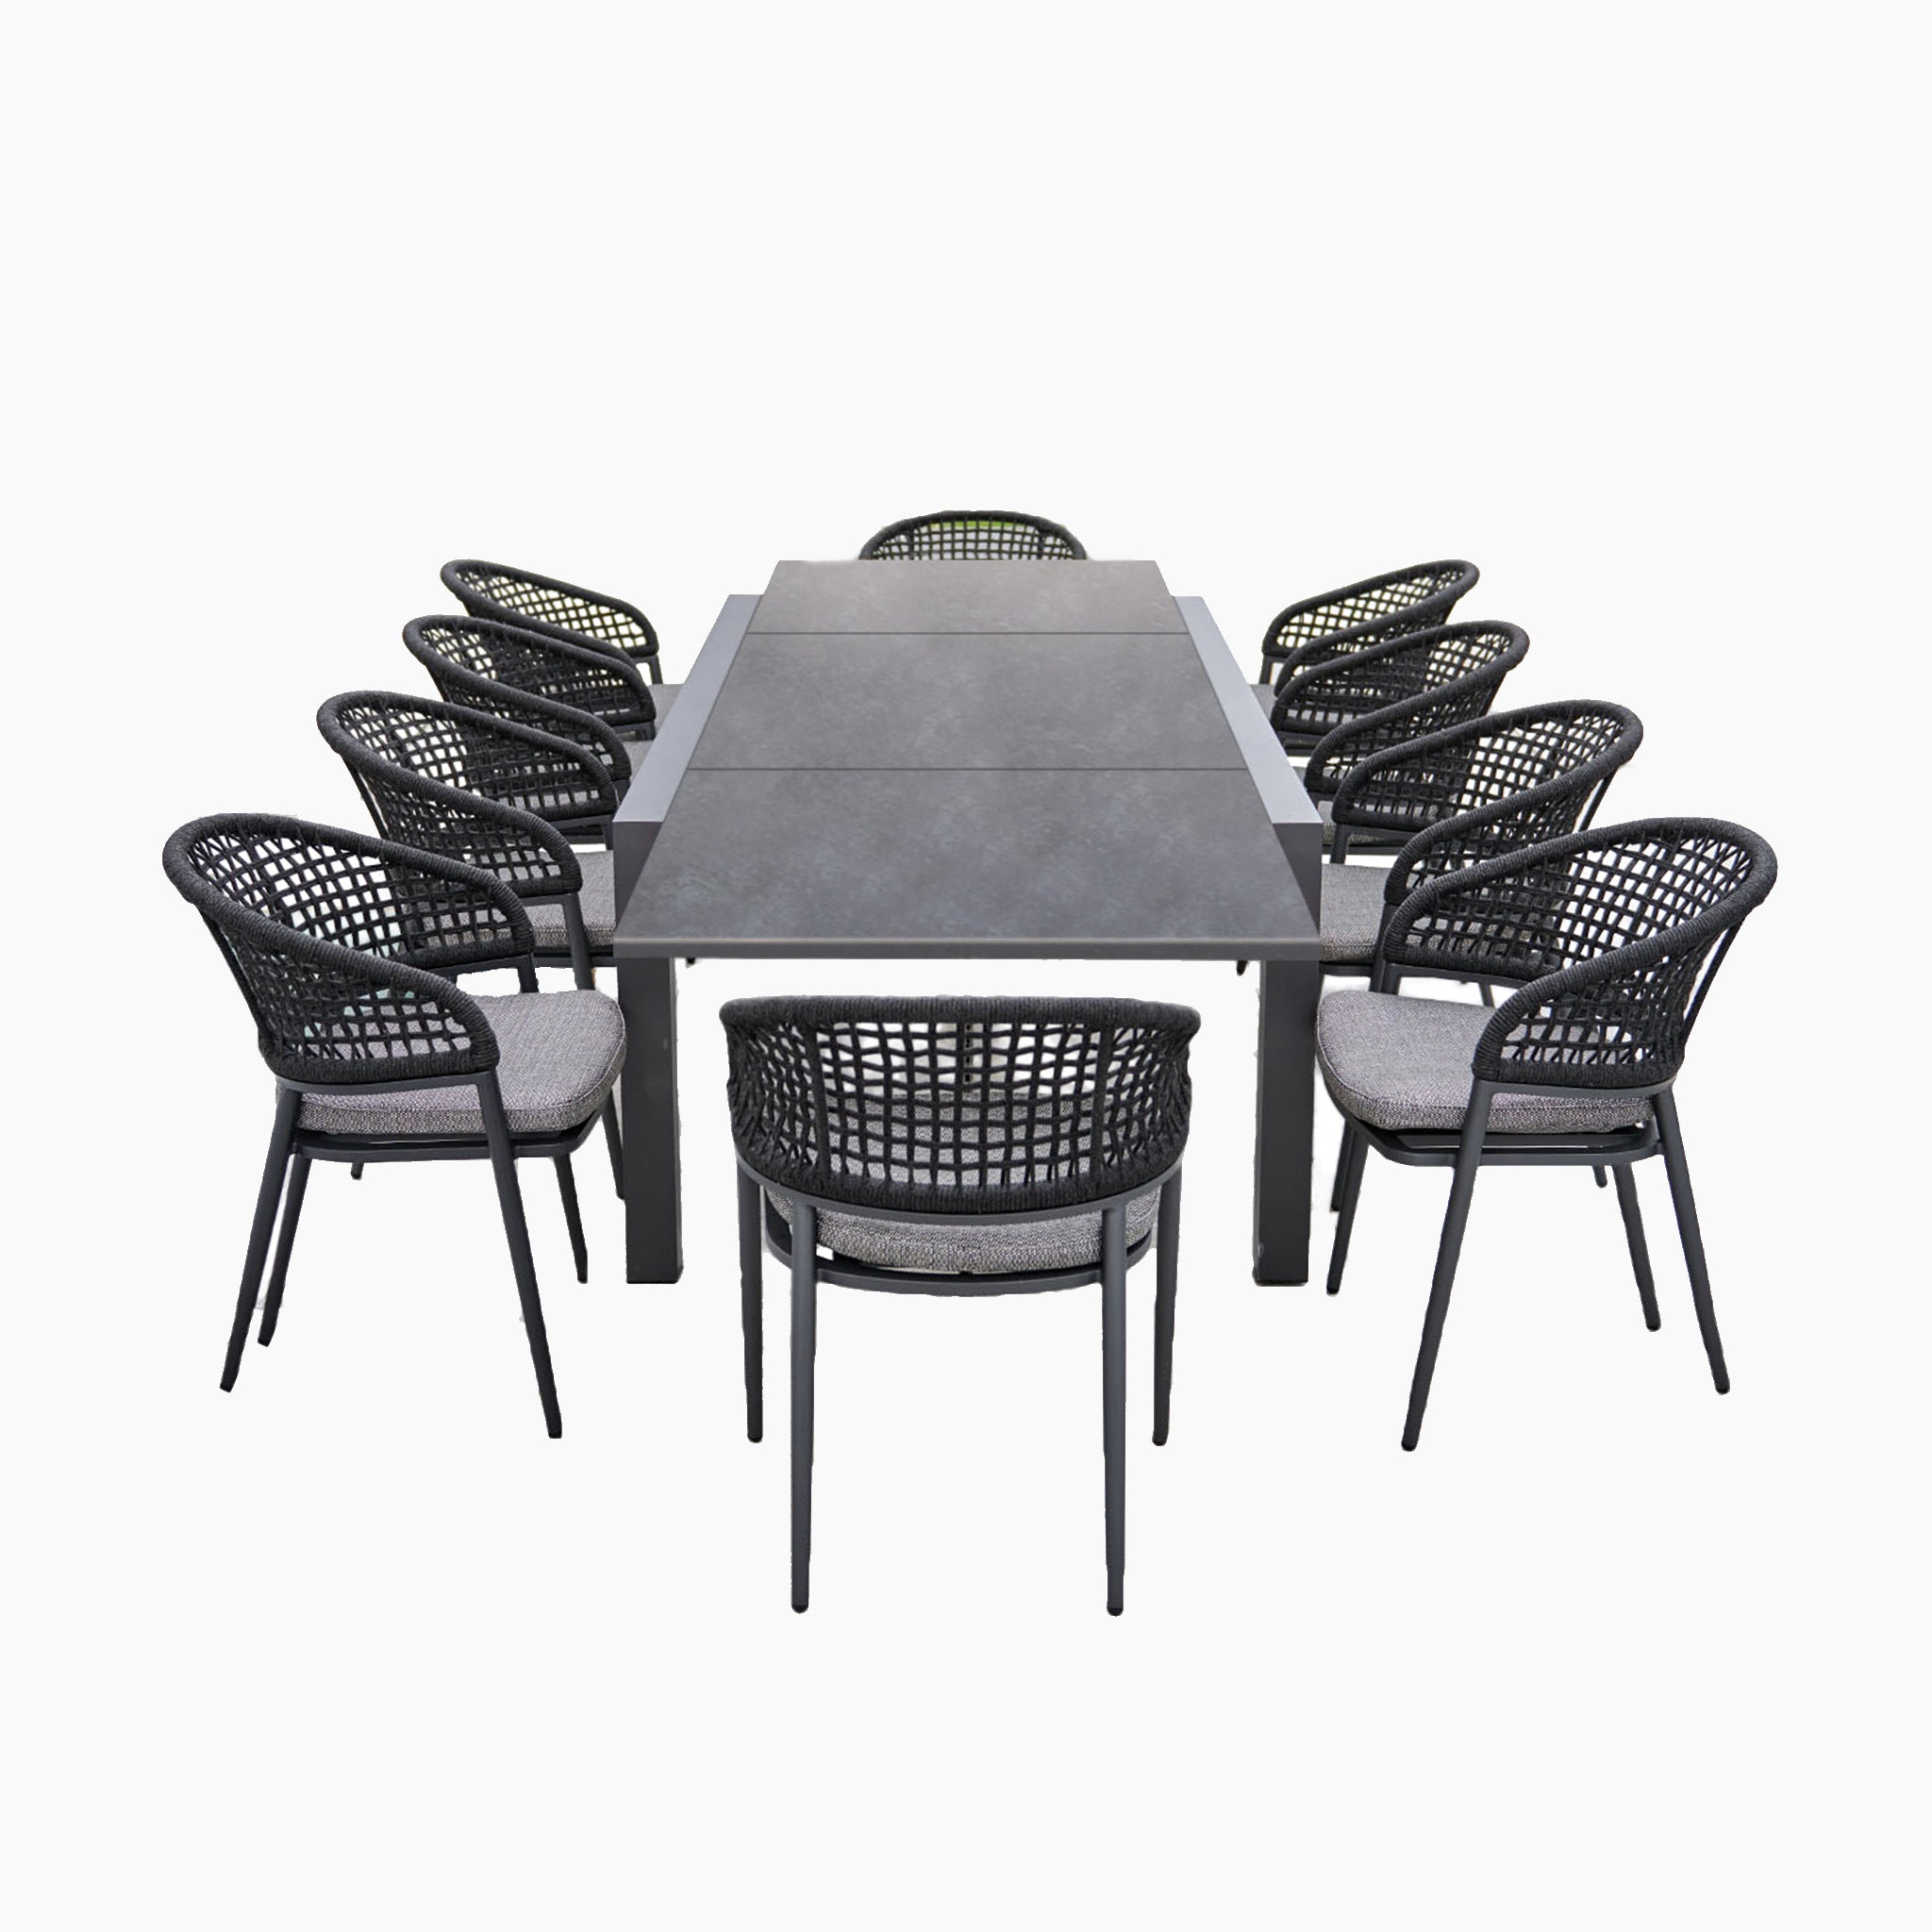 Kalama 10 Seat Rectangular Extending Dining Set with Ceramic Table in Charcoal